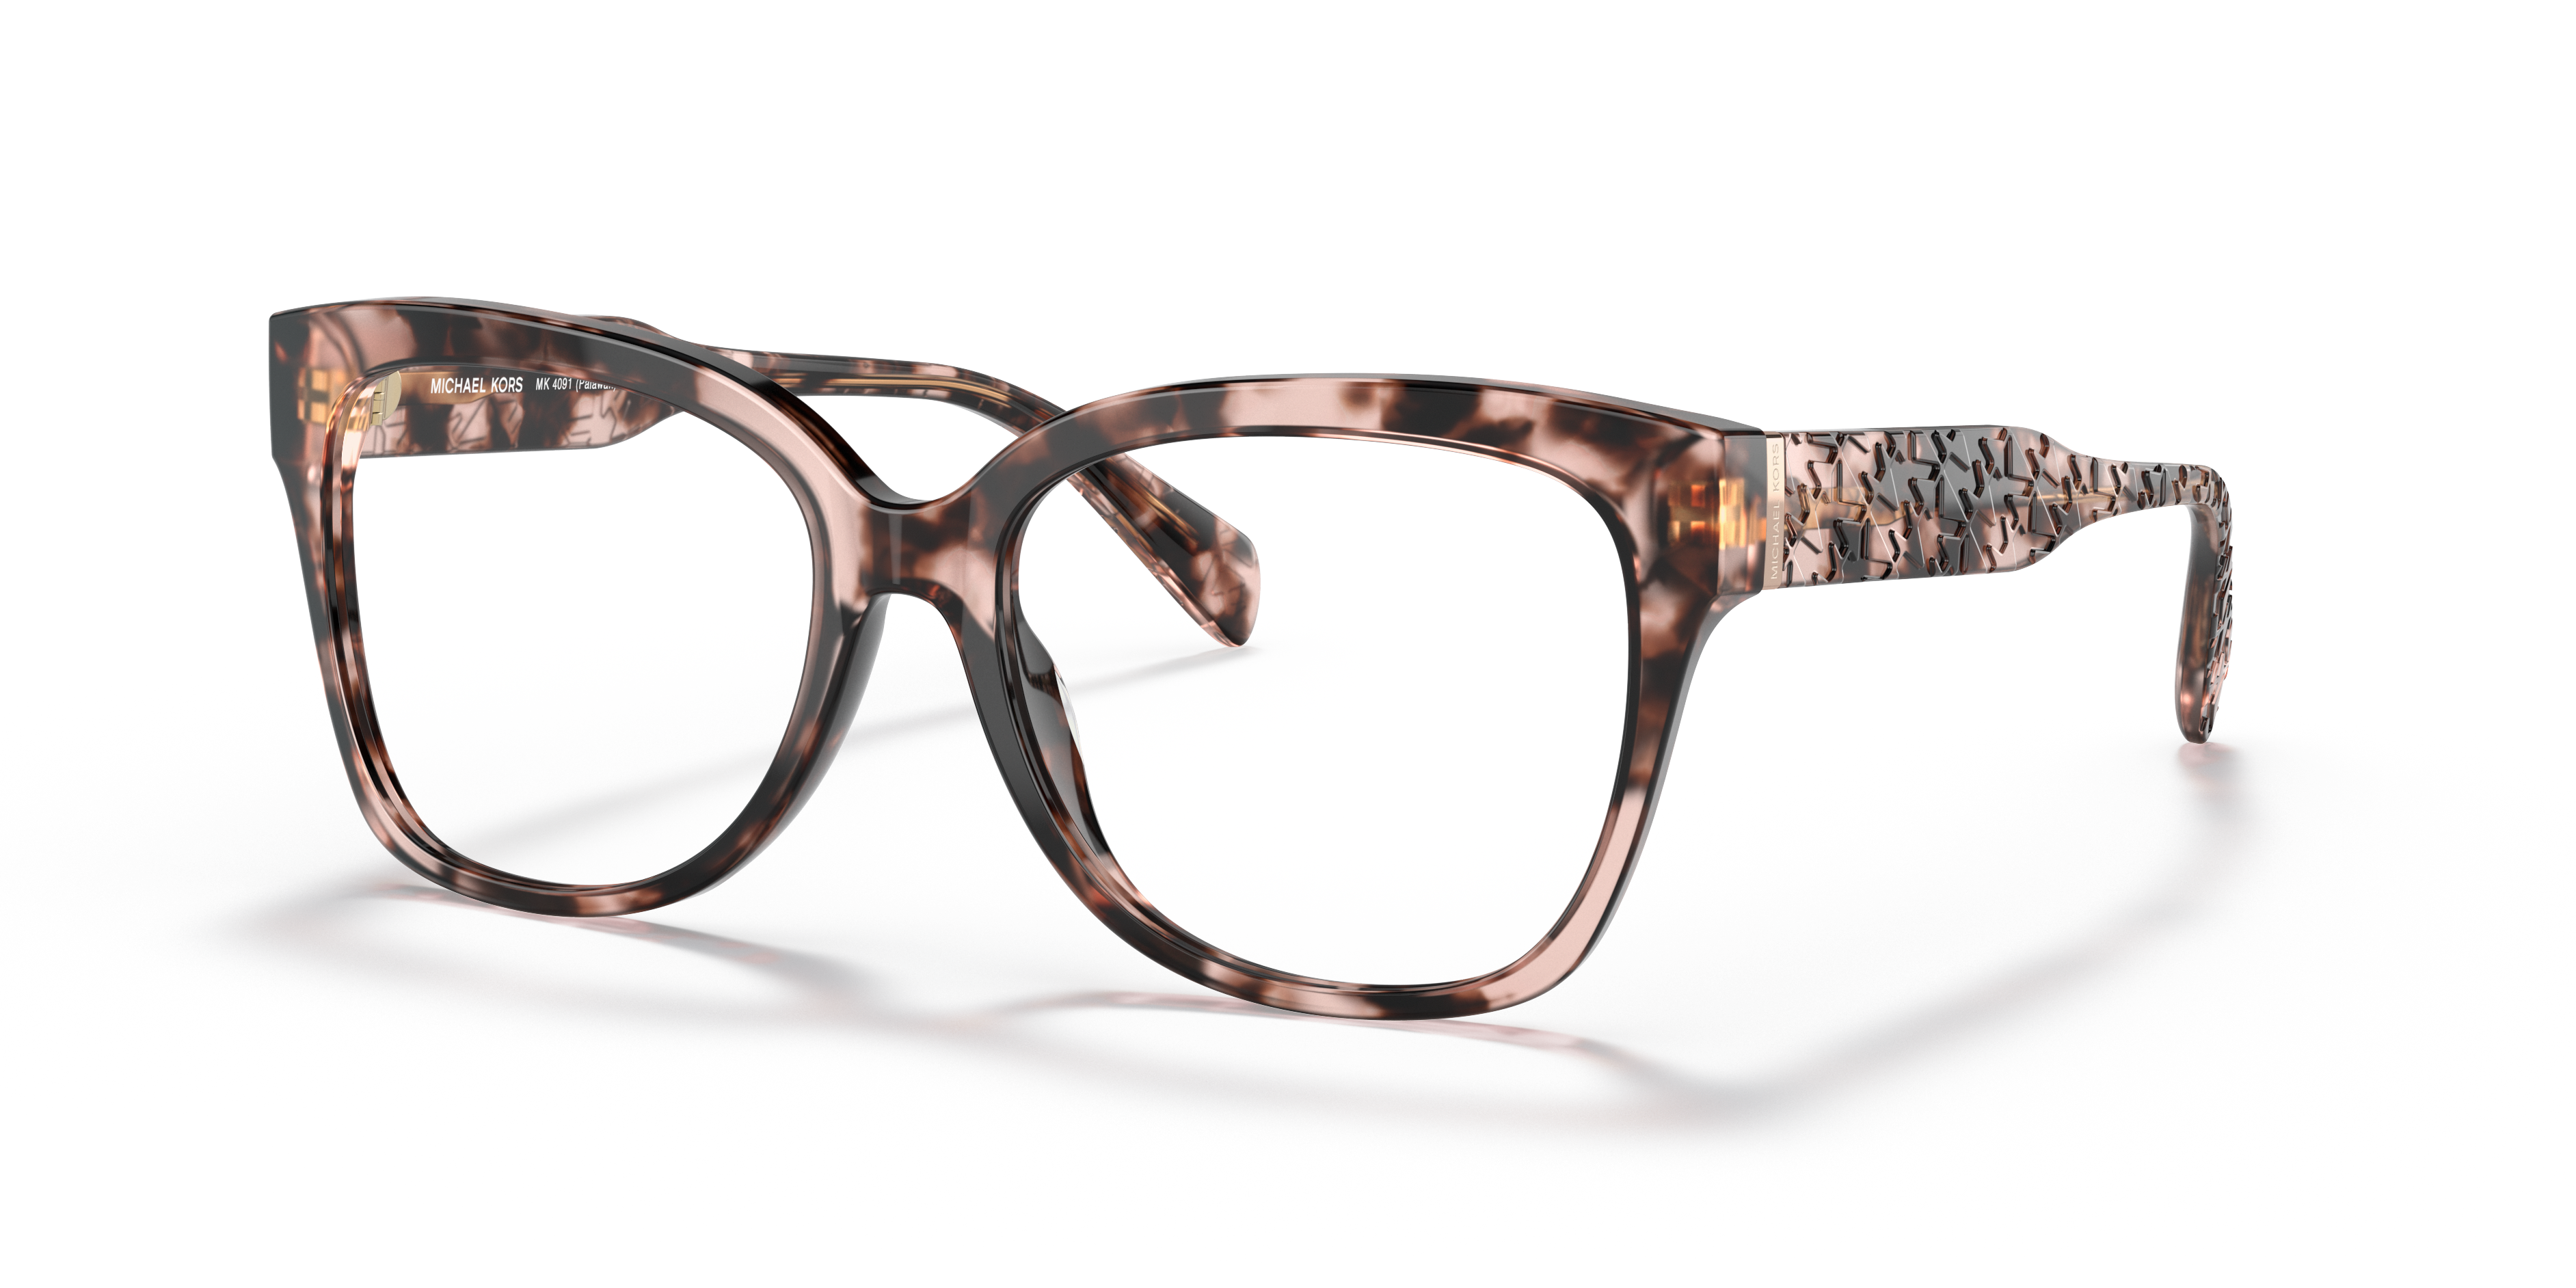 Amazoncom Michael Kors MK 4054 3105 Crystal Clear Eyeglasses Frame wDemo  lens52mm 5220140  Clothing Shoes  Jewelry